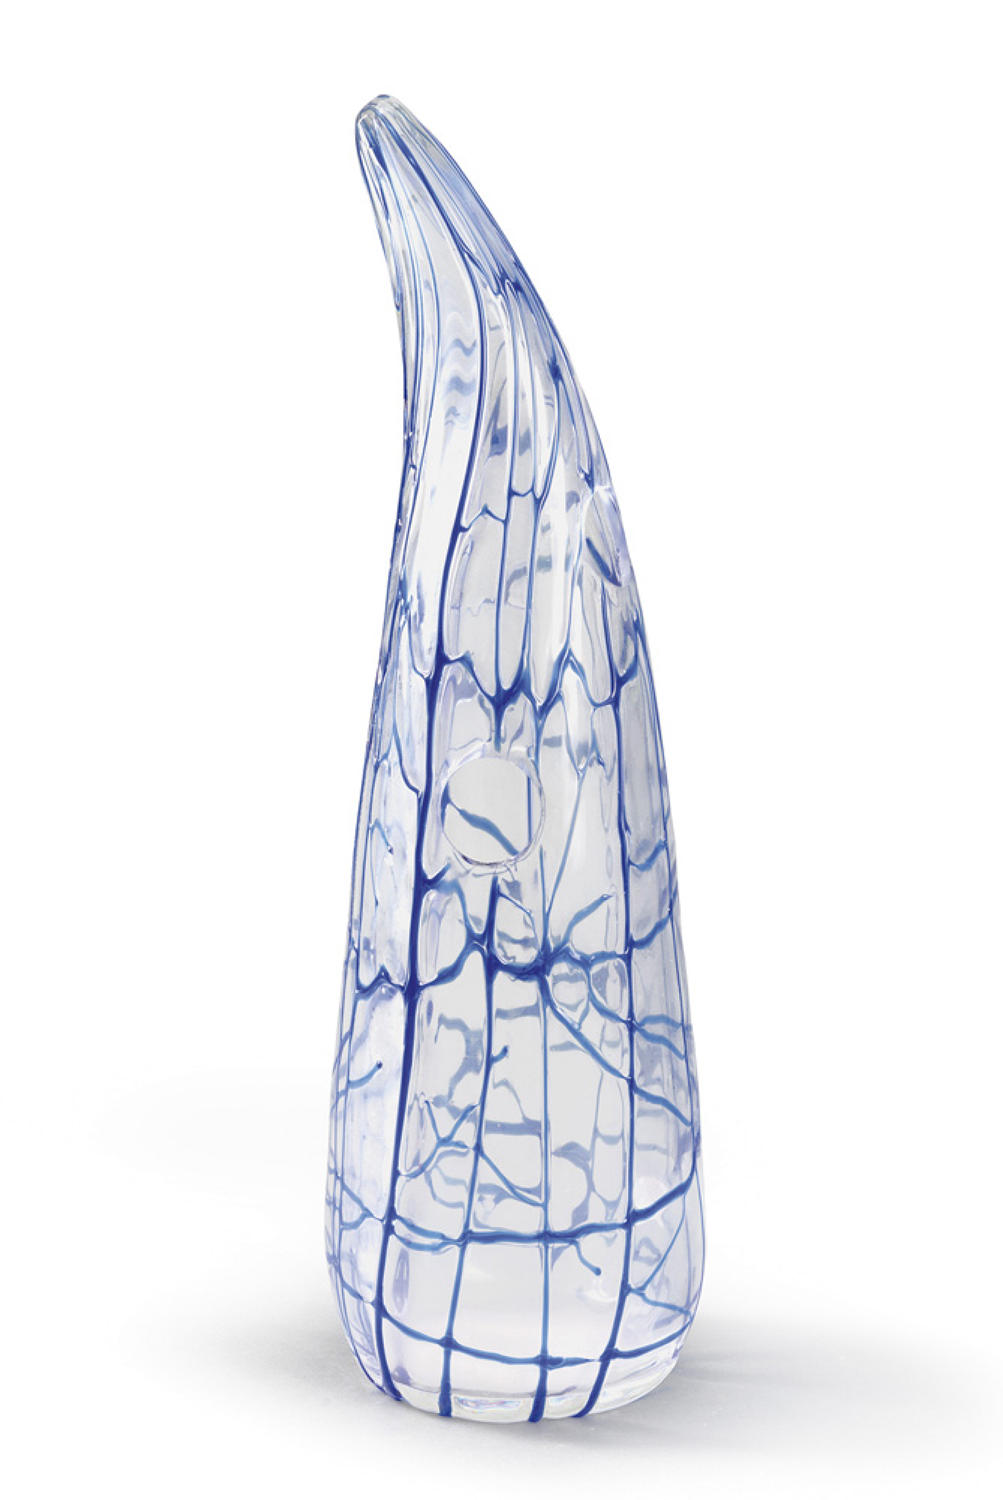 Andrea Anastasio unusual vase